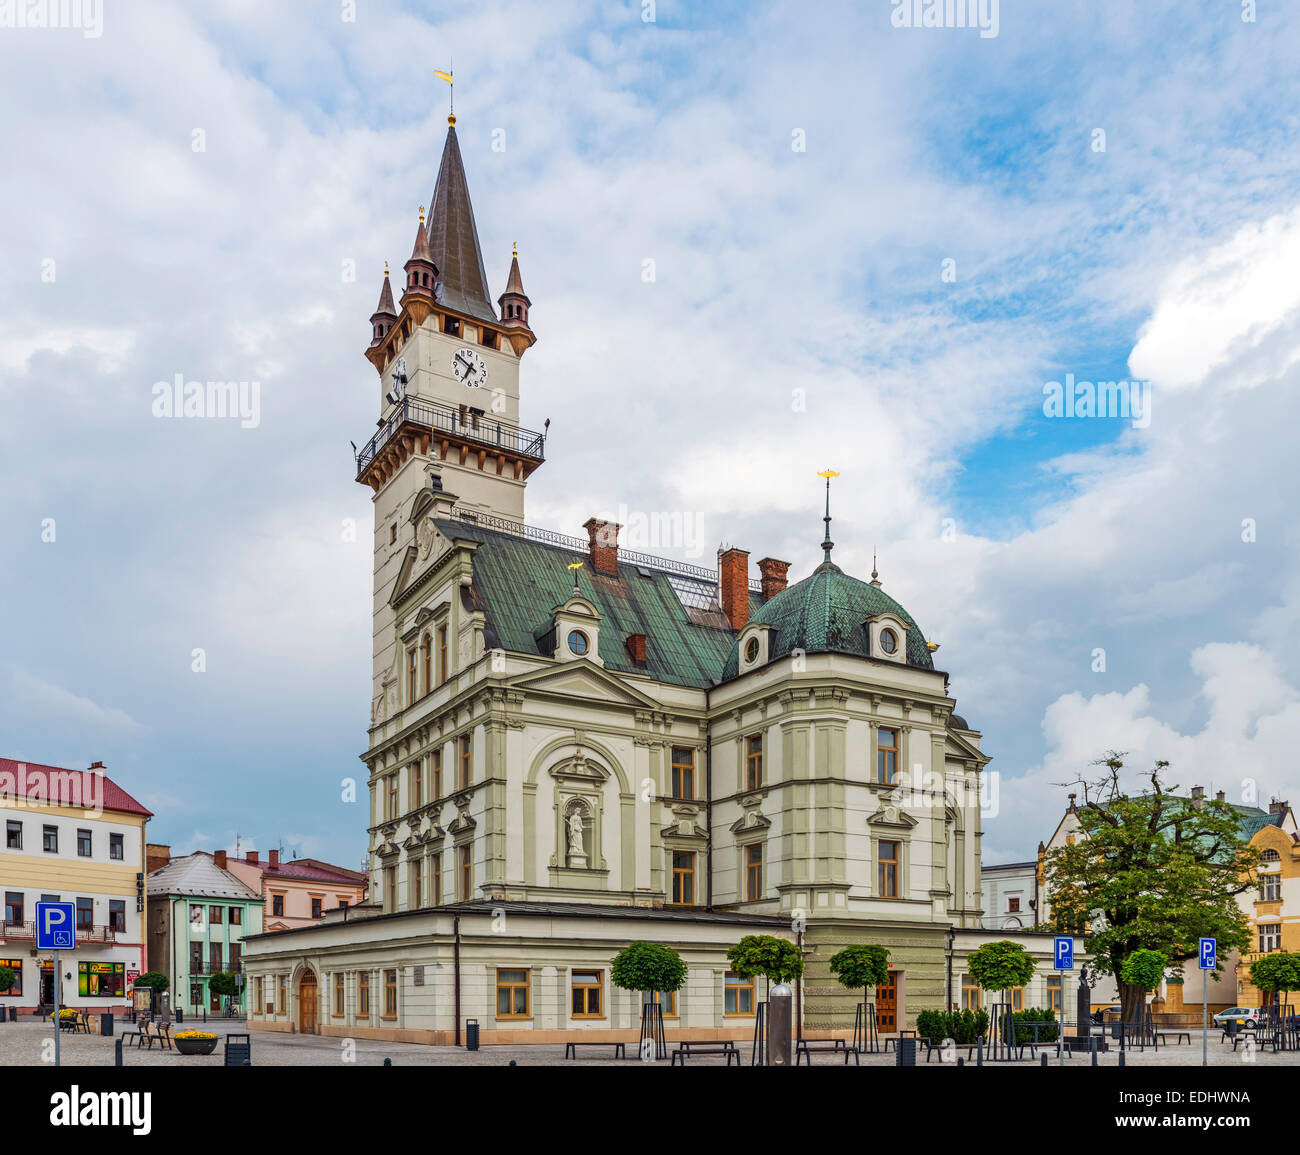 Town Hall, Uničov or Mährisch Neustadt, Czech Republic Stock Photo